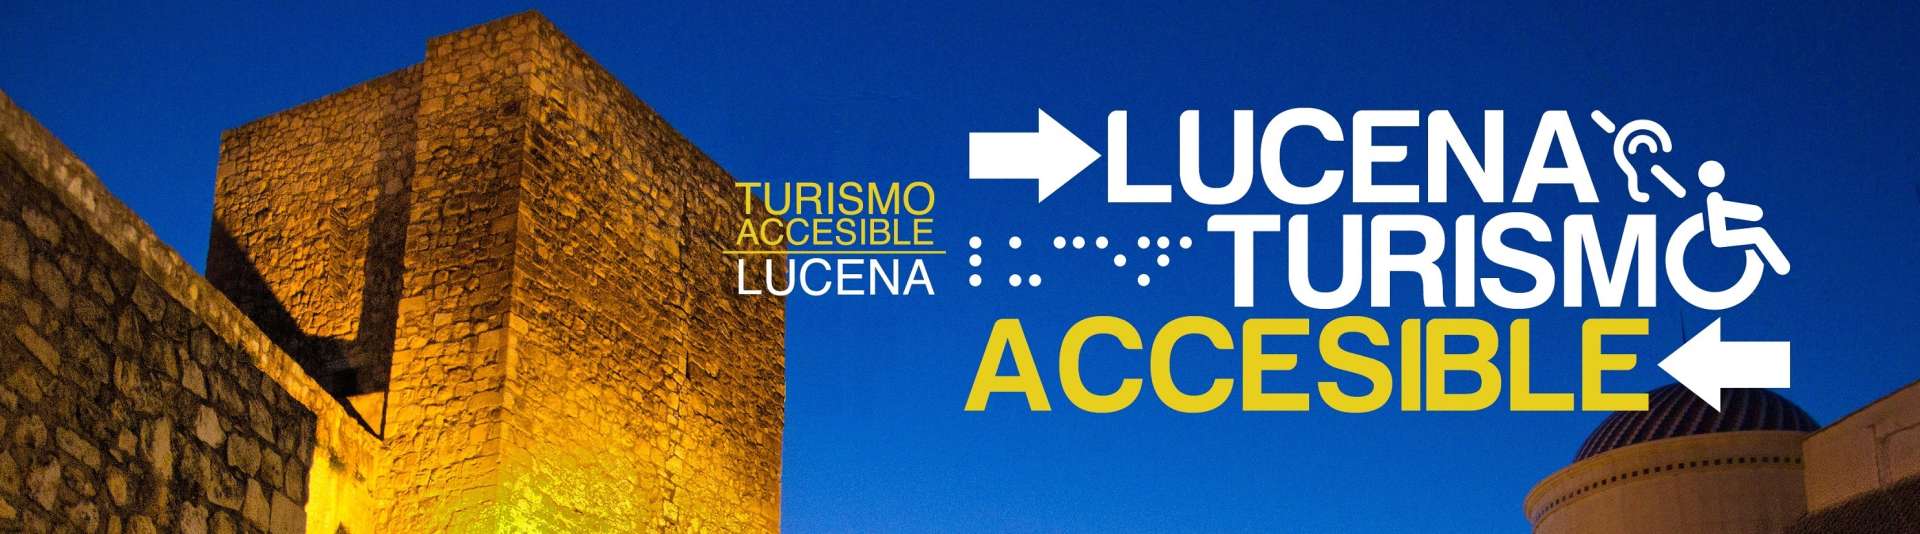 Rutas turísticas de Lucena